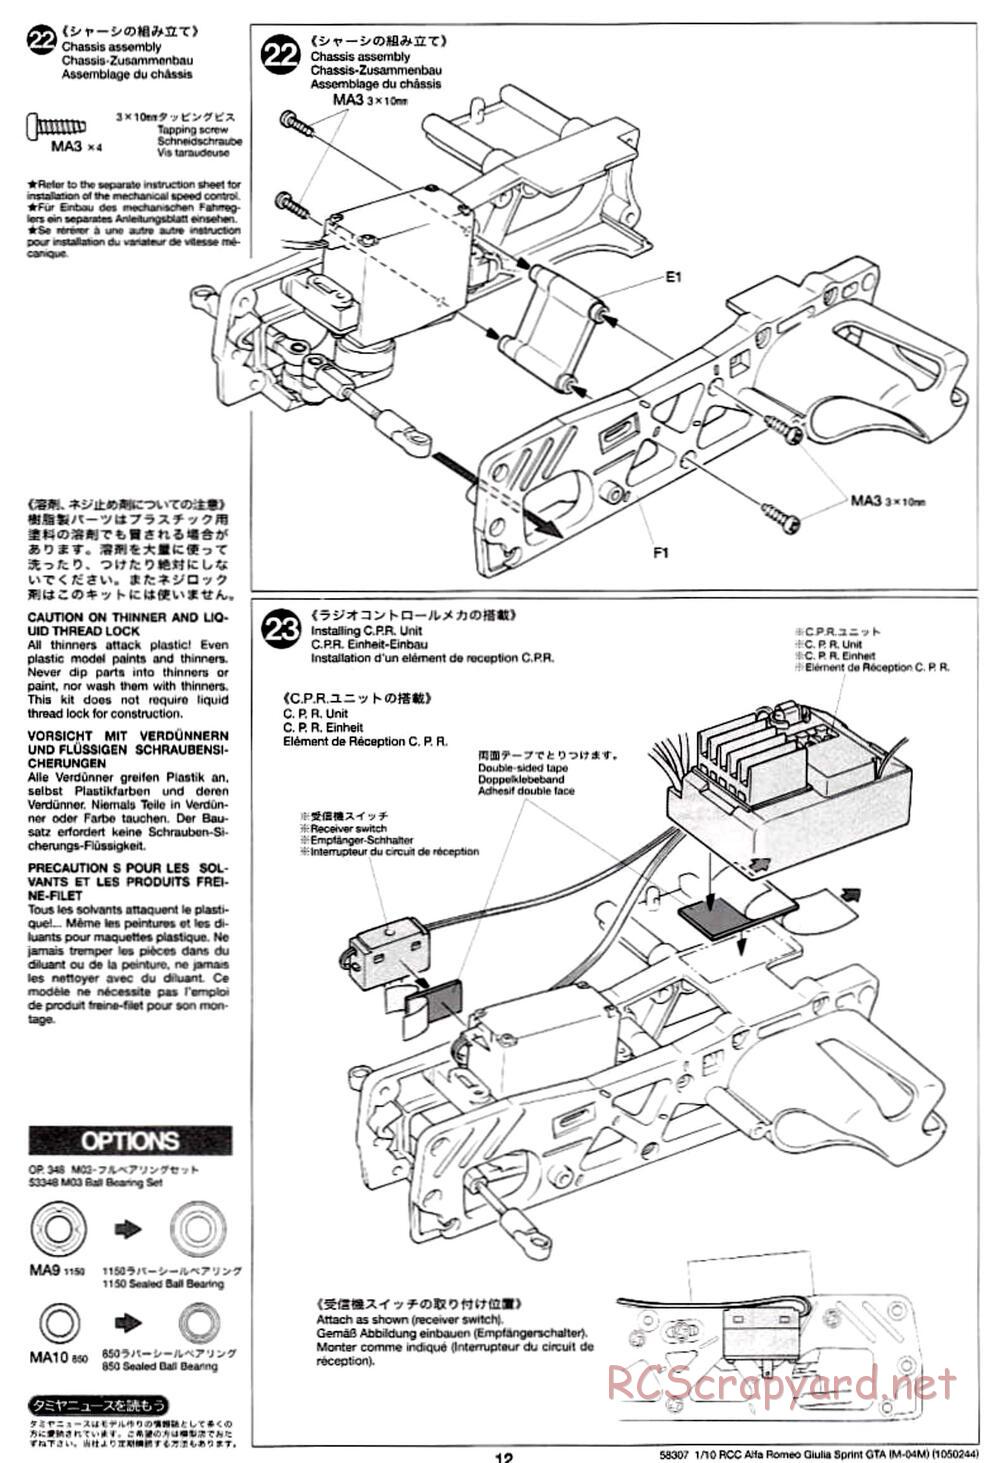 Tamiya - Alfa Romeo Giulia Sprint GTA - M04M Chassis - Manual - Page 12